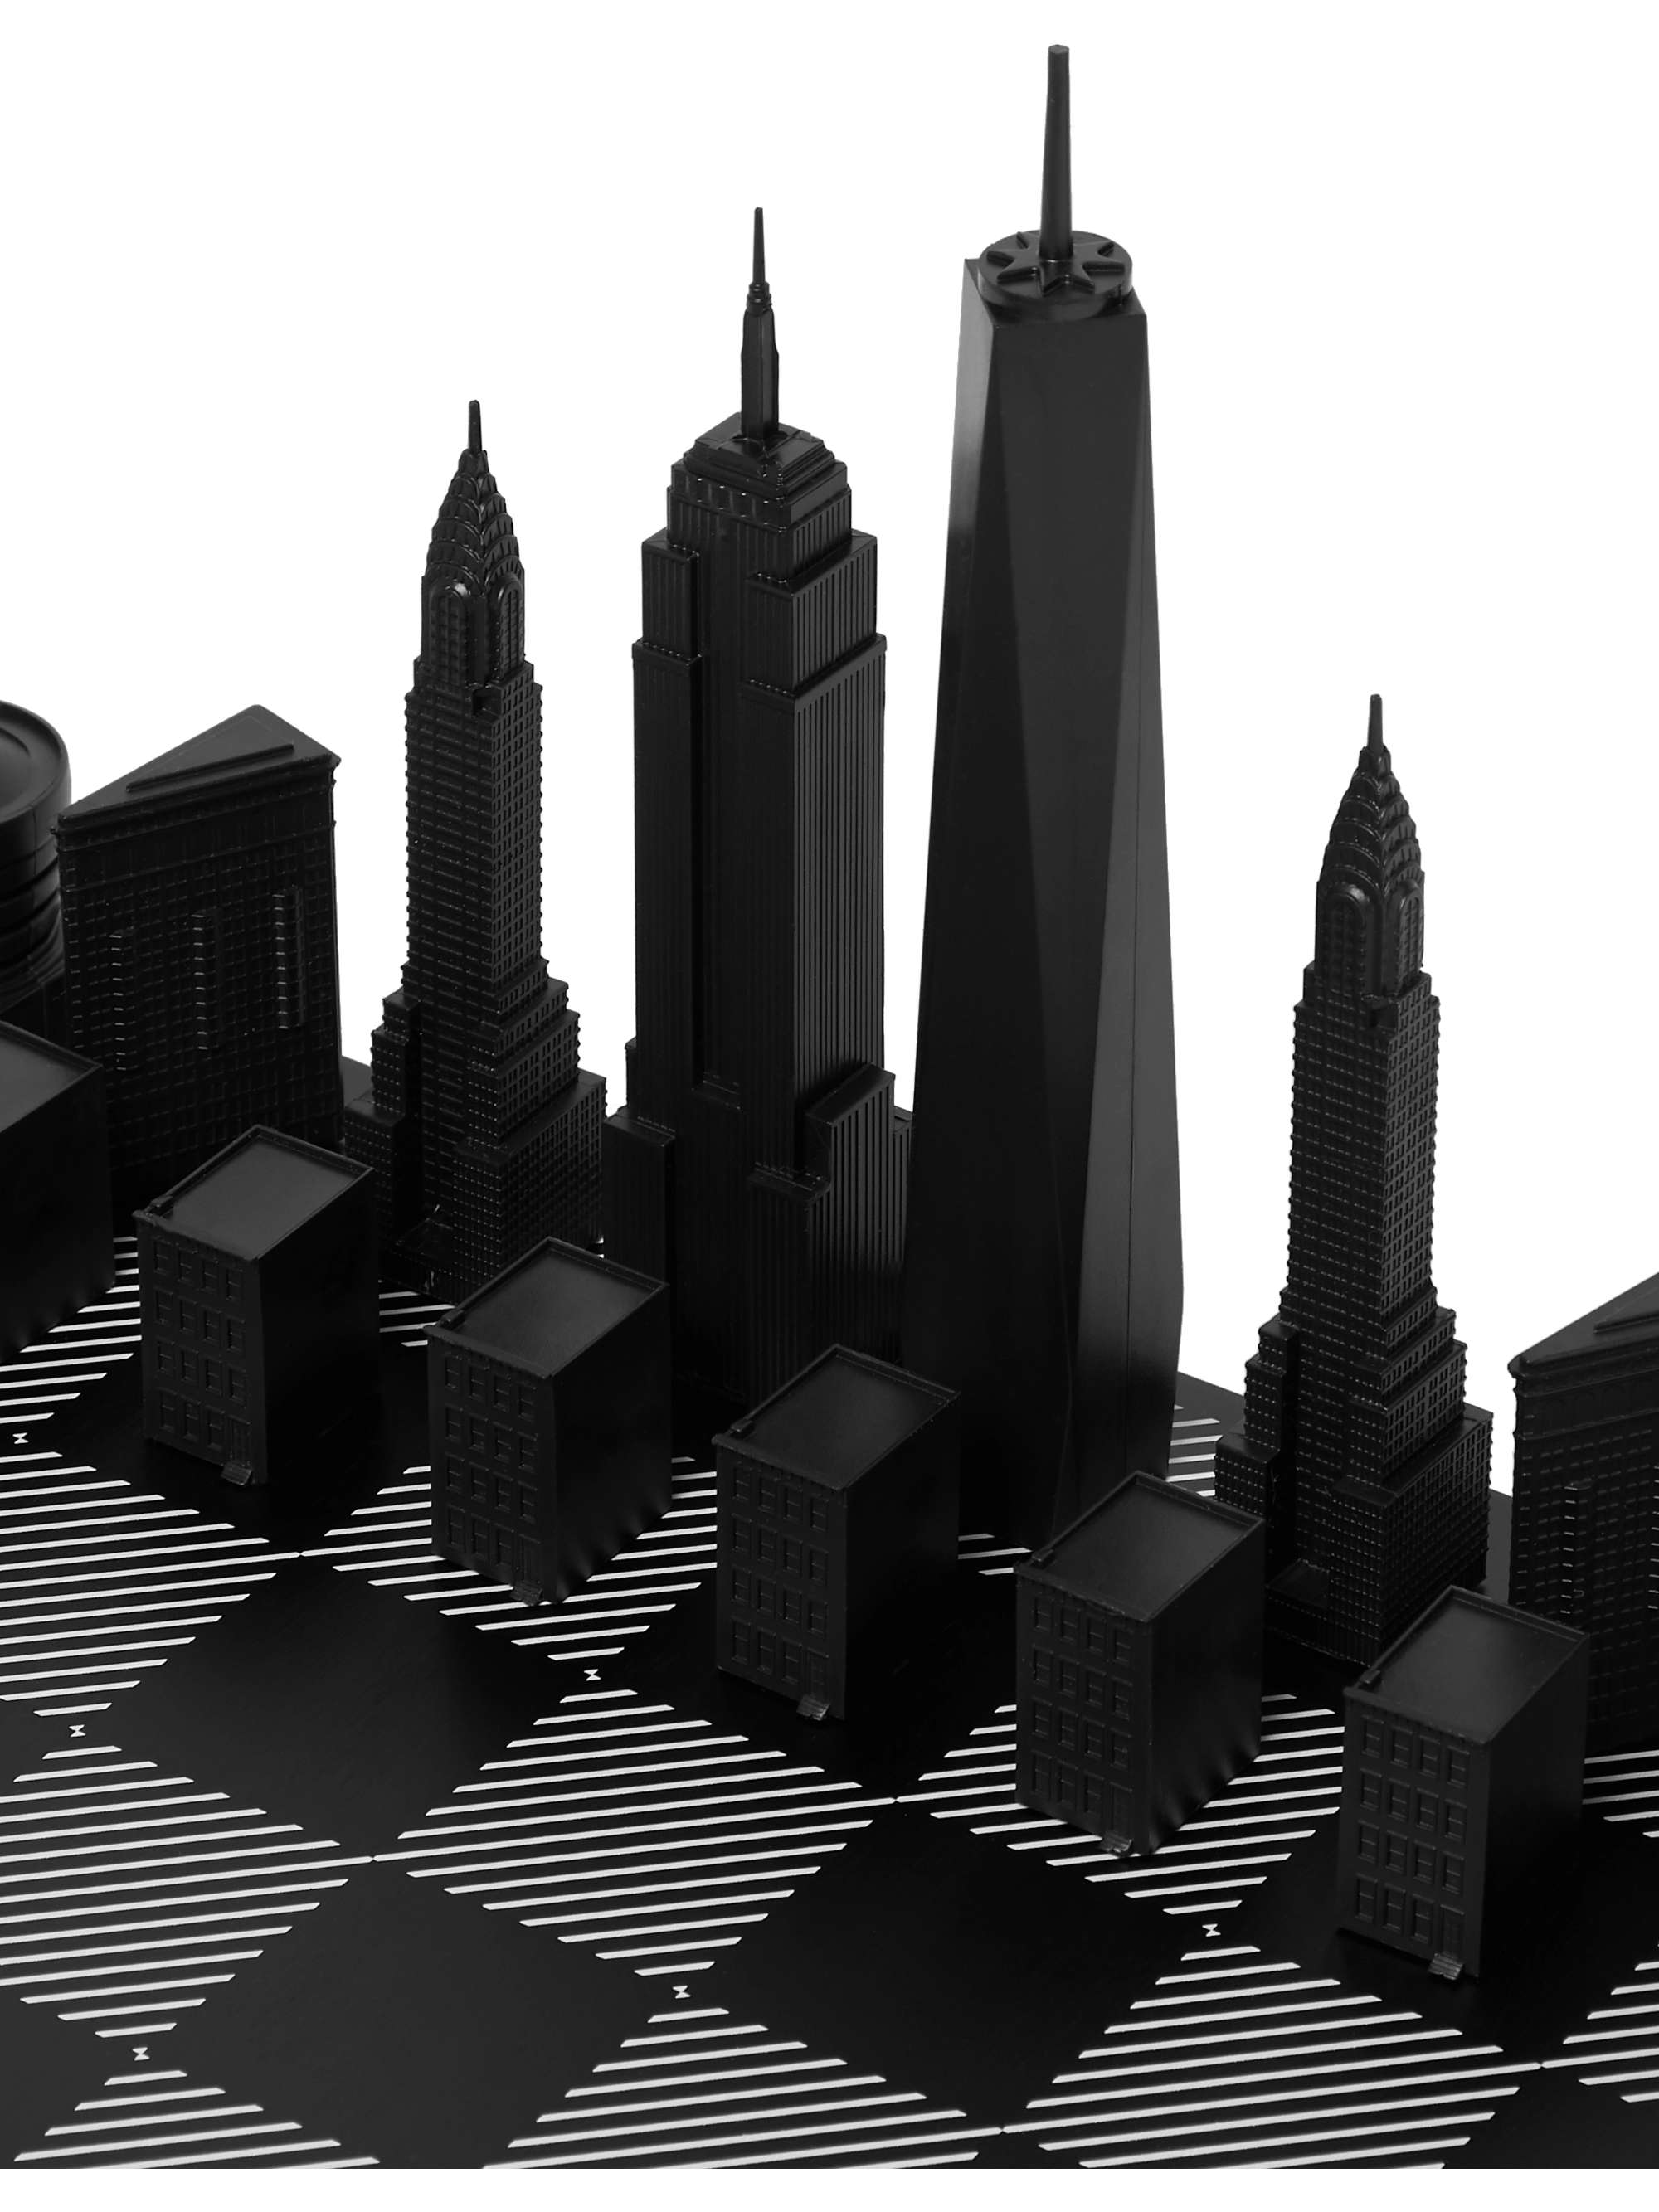 Skyline Chess London vs New York Acrylic and Wood Chess Set